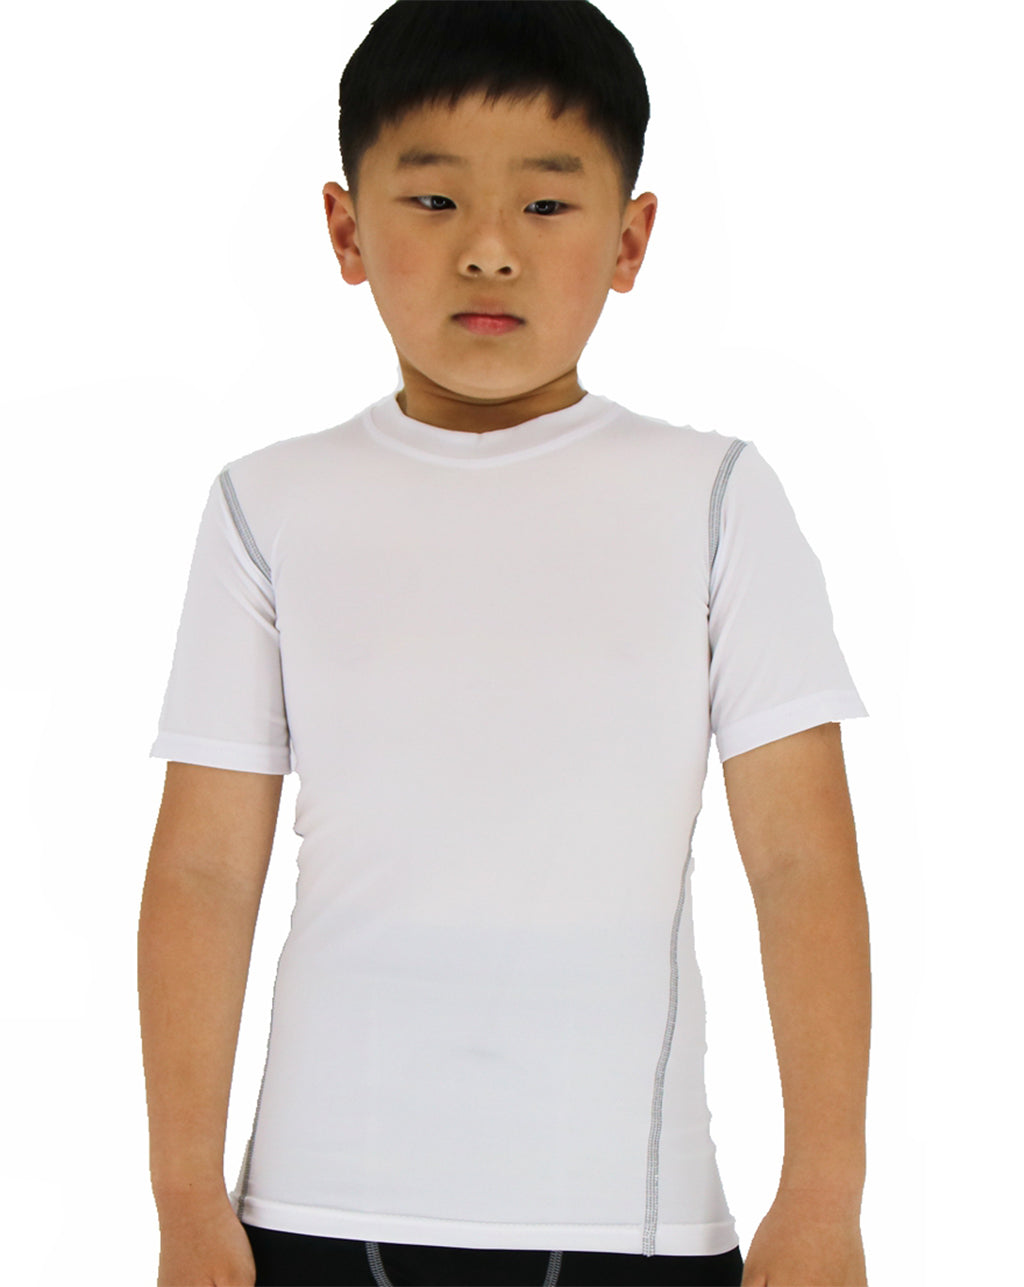 LANBAOSI Boy's Compression Shirts Child's Short Sleeve Base Layer Tops